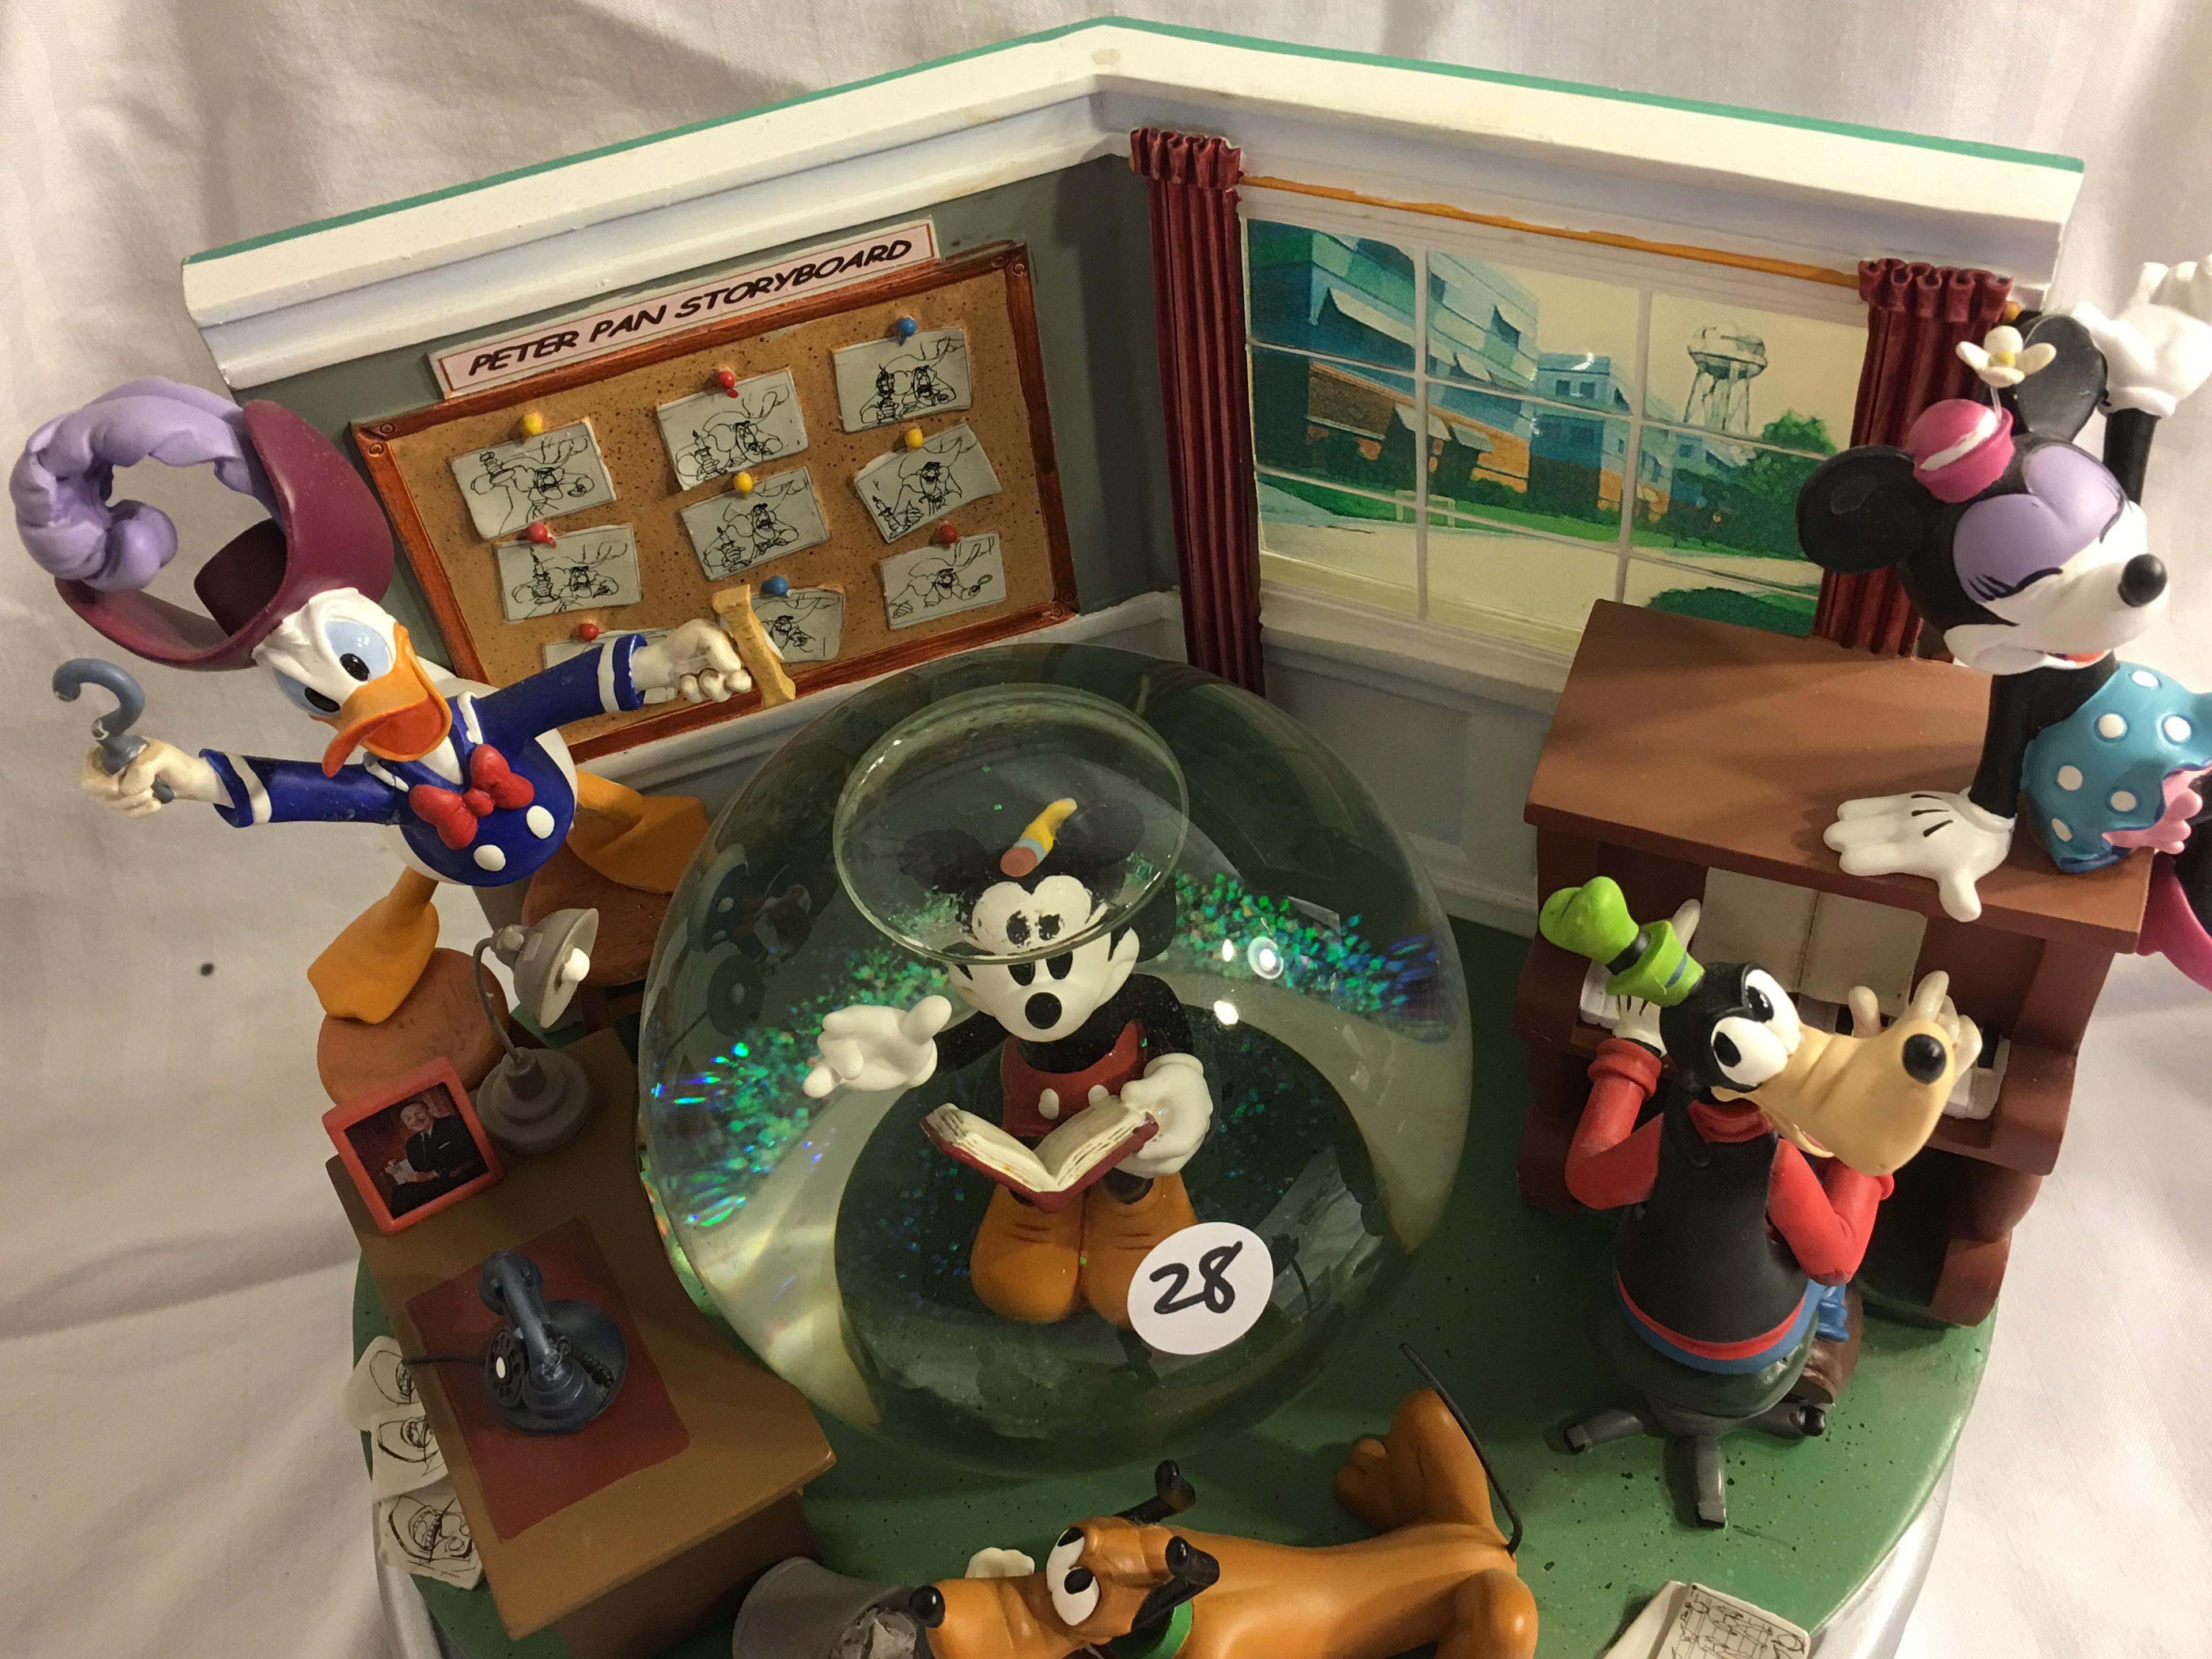 Collector Disney Tradition Jim Shore Enesco Mickey Mouse Snowglobe 9"x11" Has minor damage